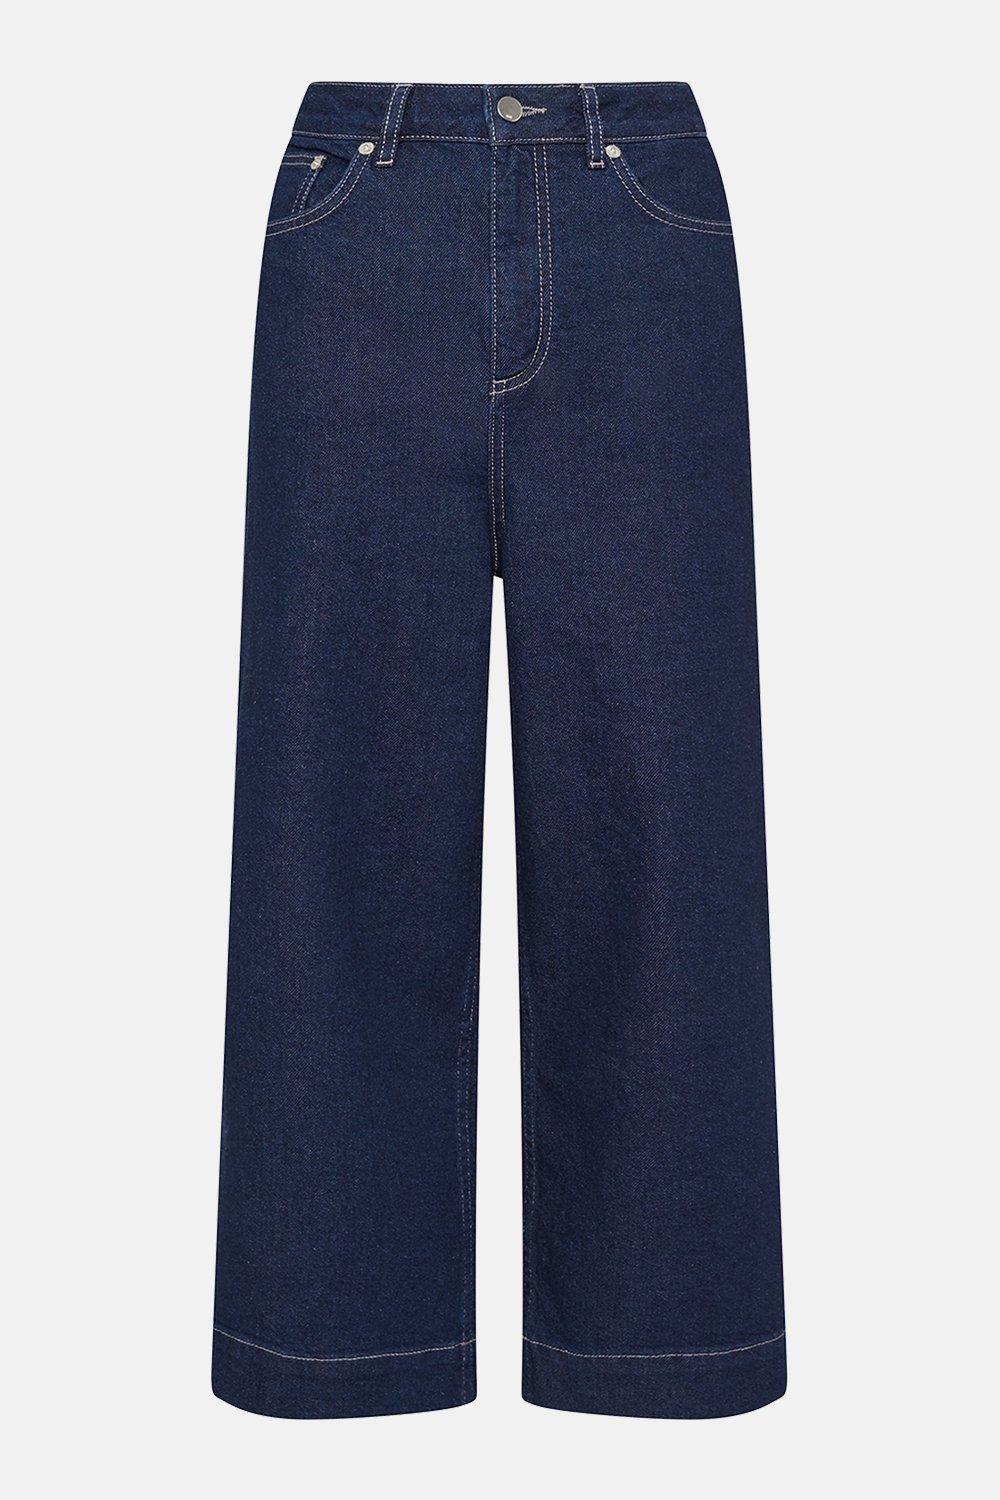 wide leg indigo jeans